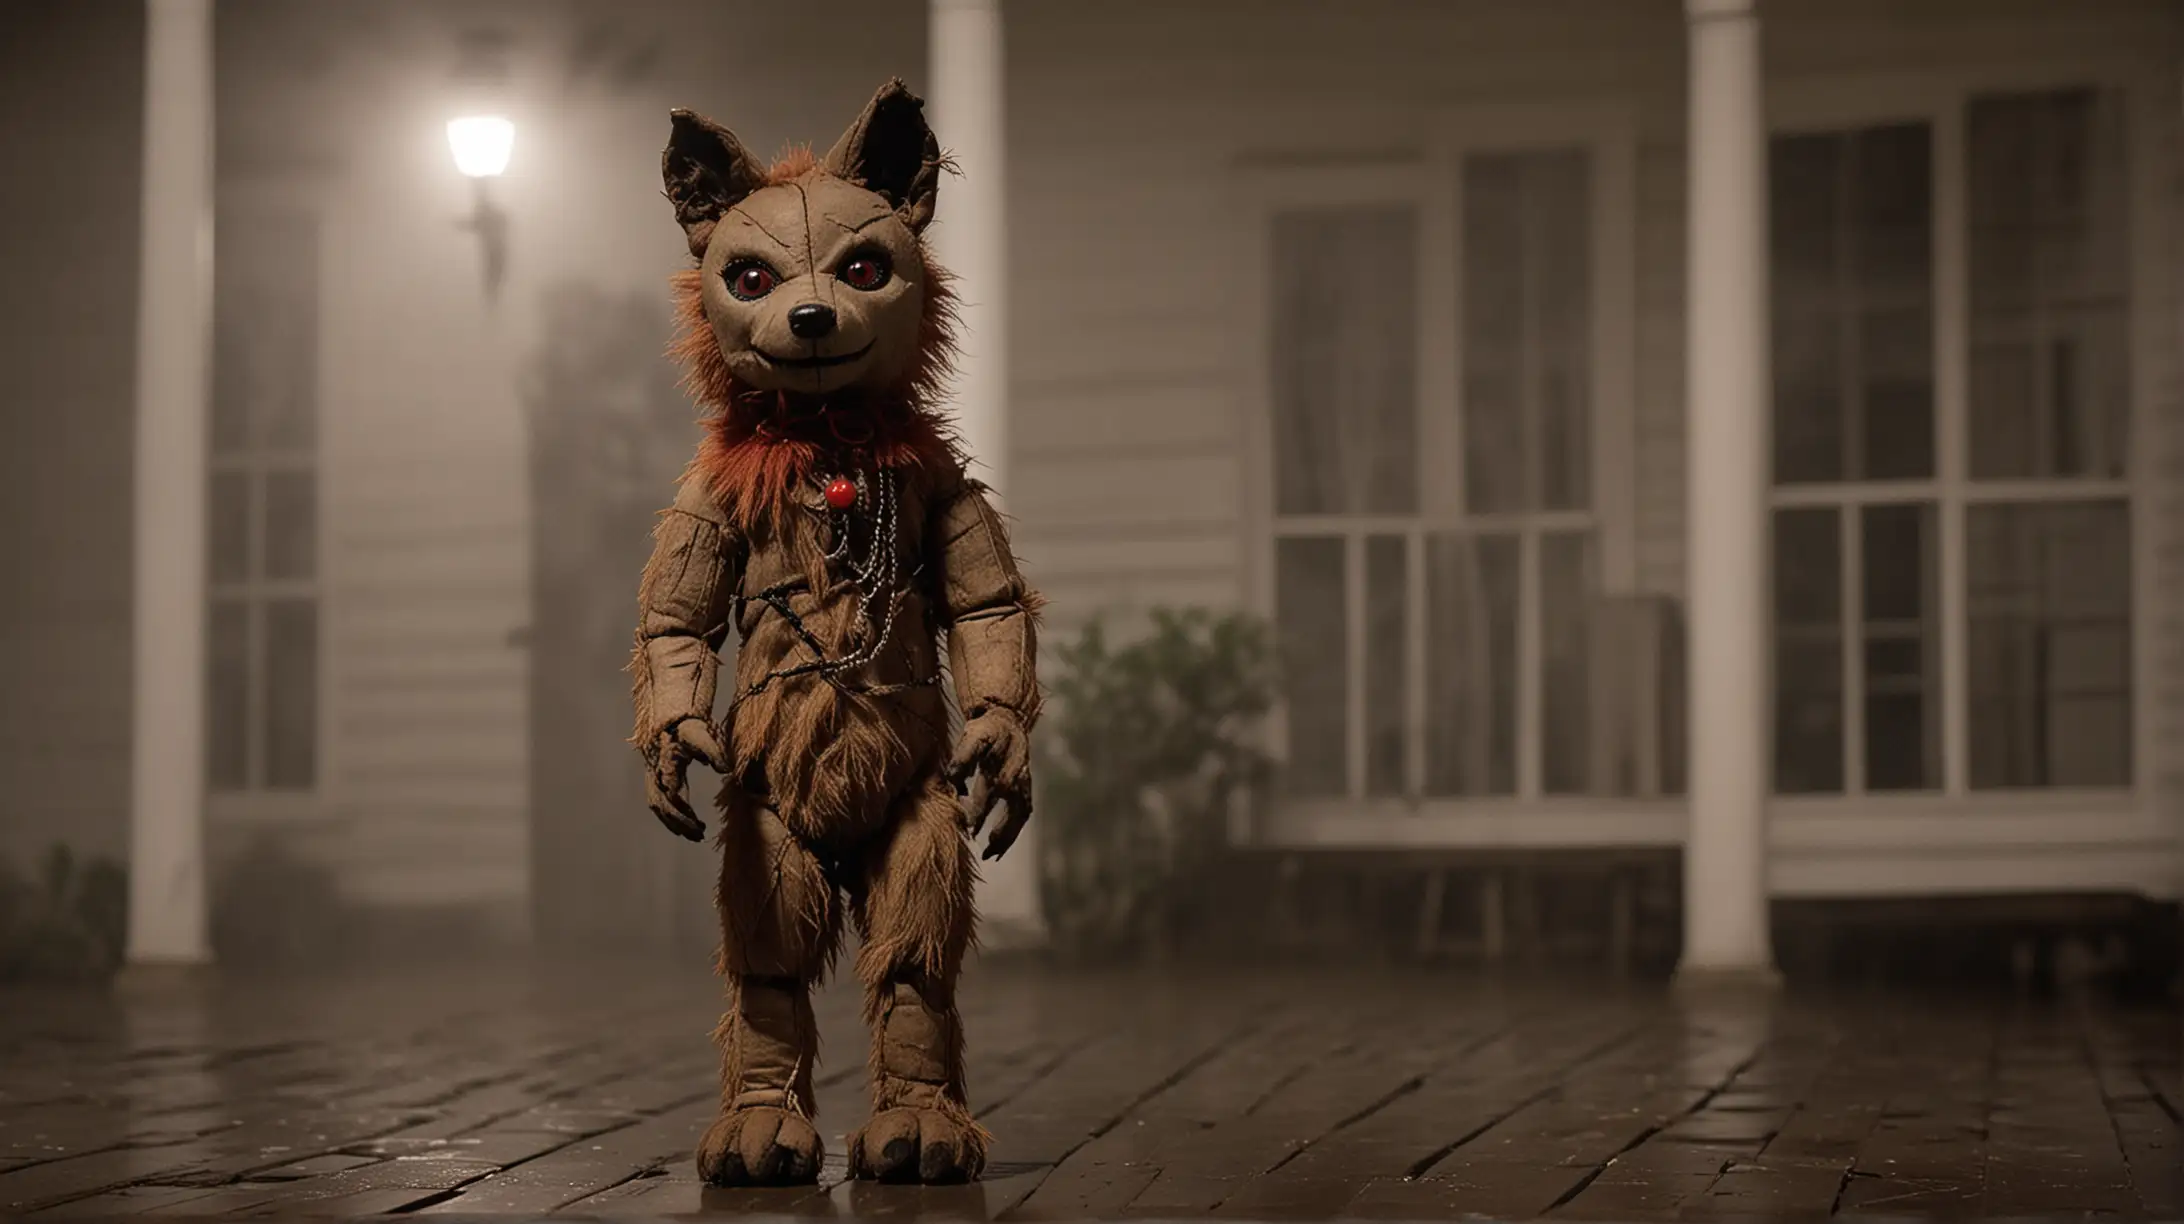 Voodoo Wolf Doll on Louisiana Plantation Mansion Porch at Night